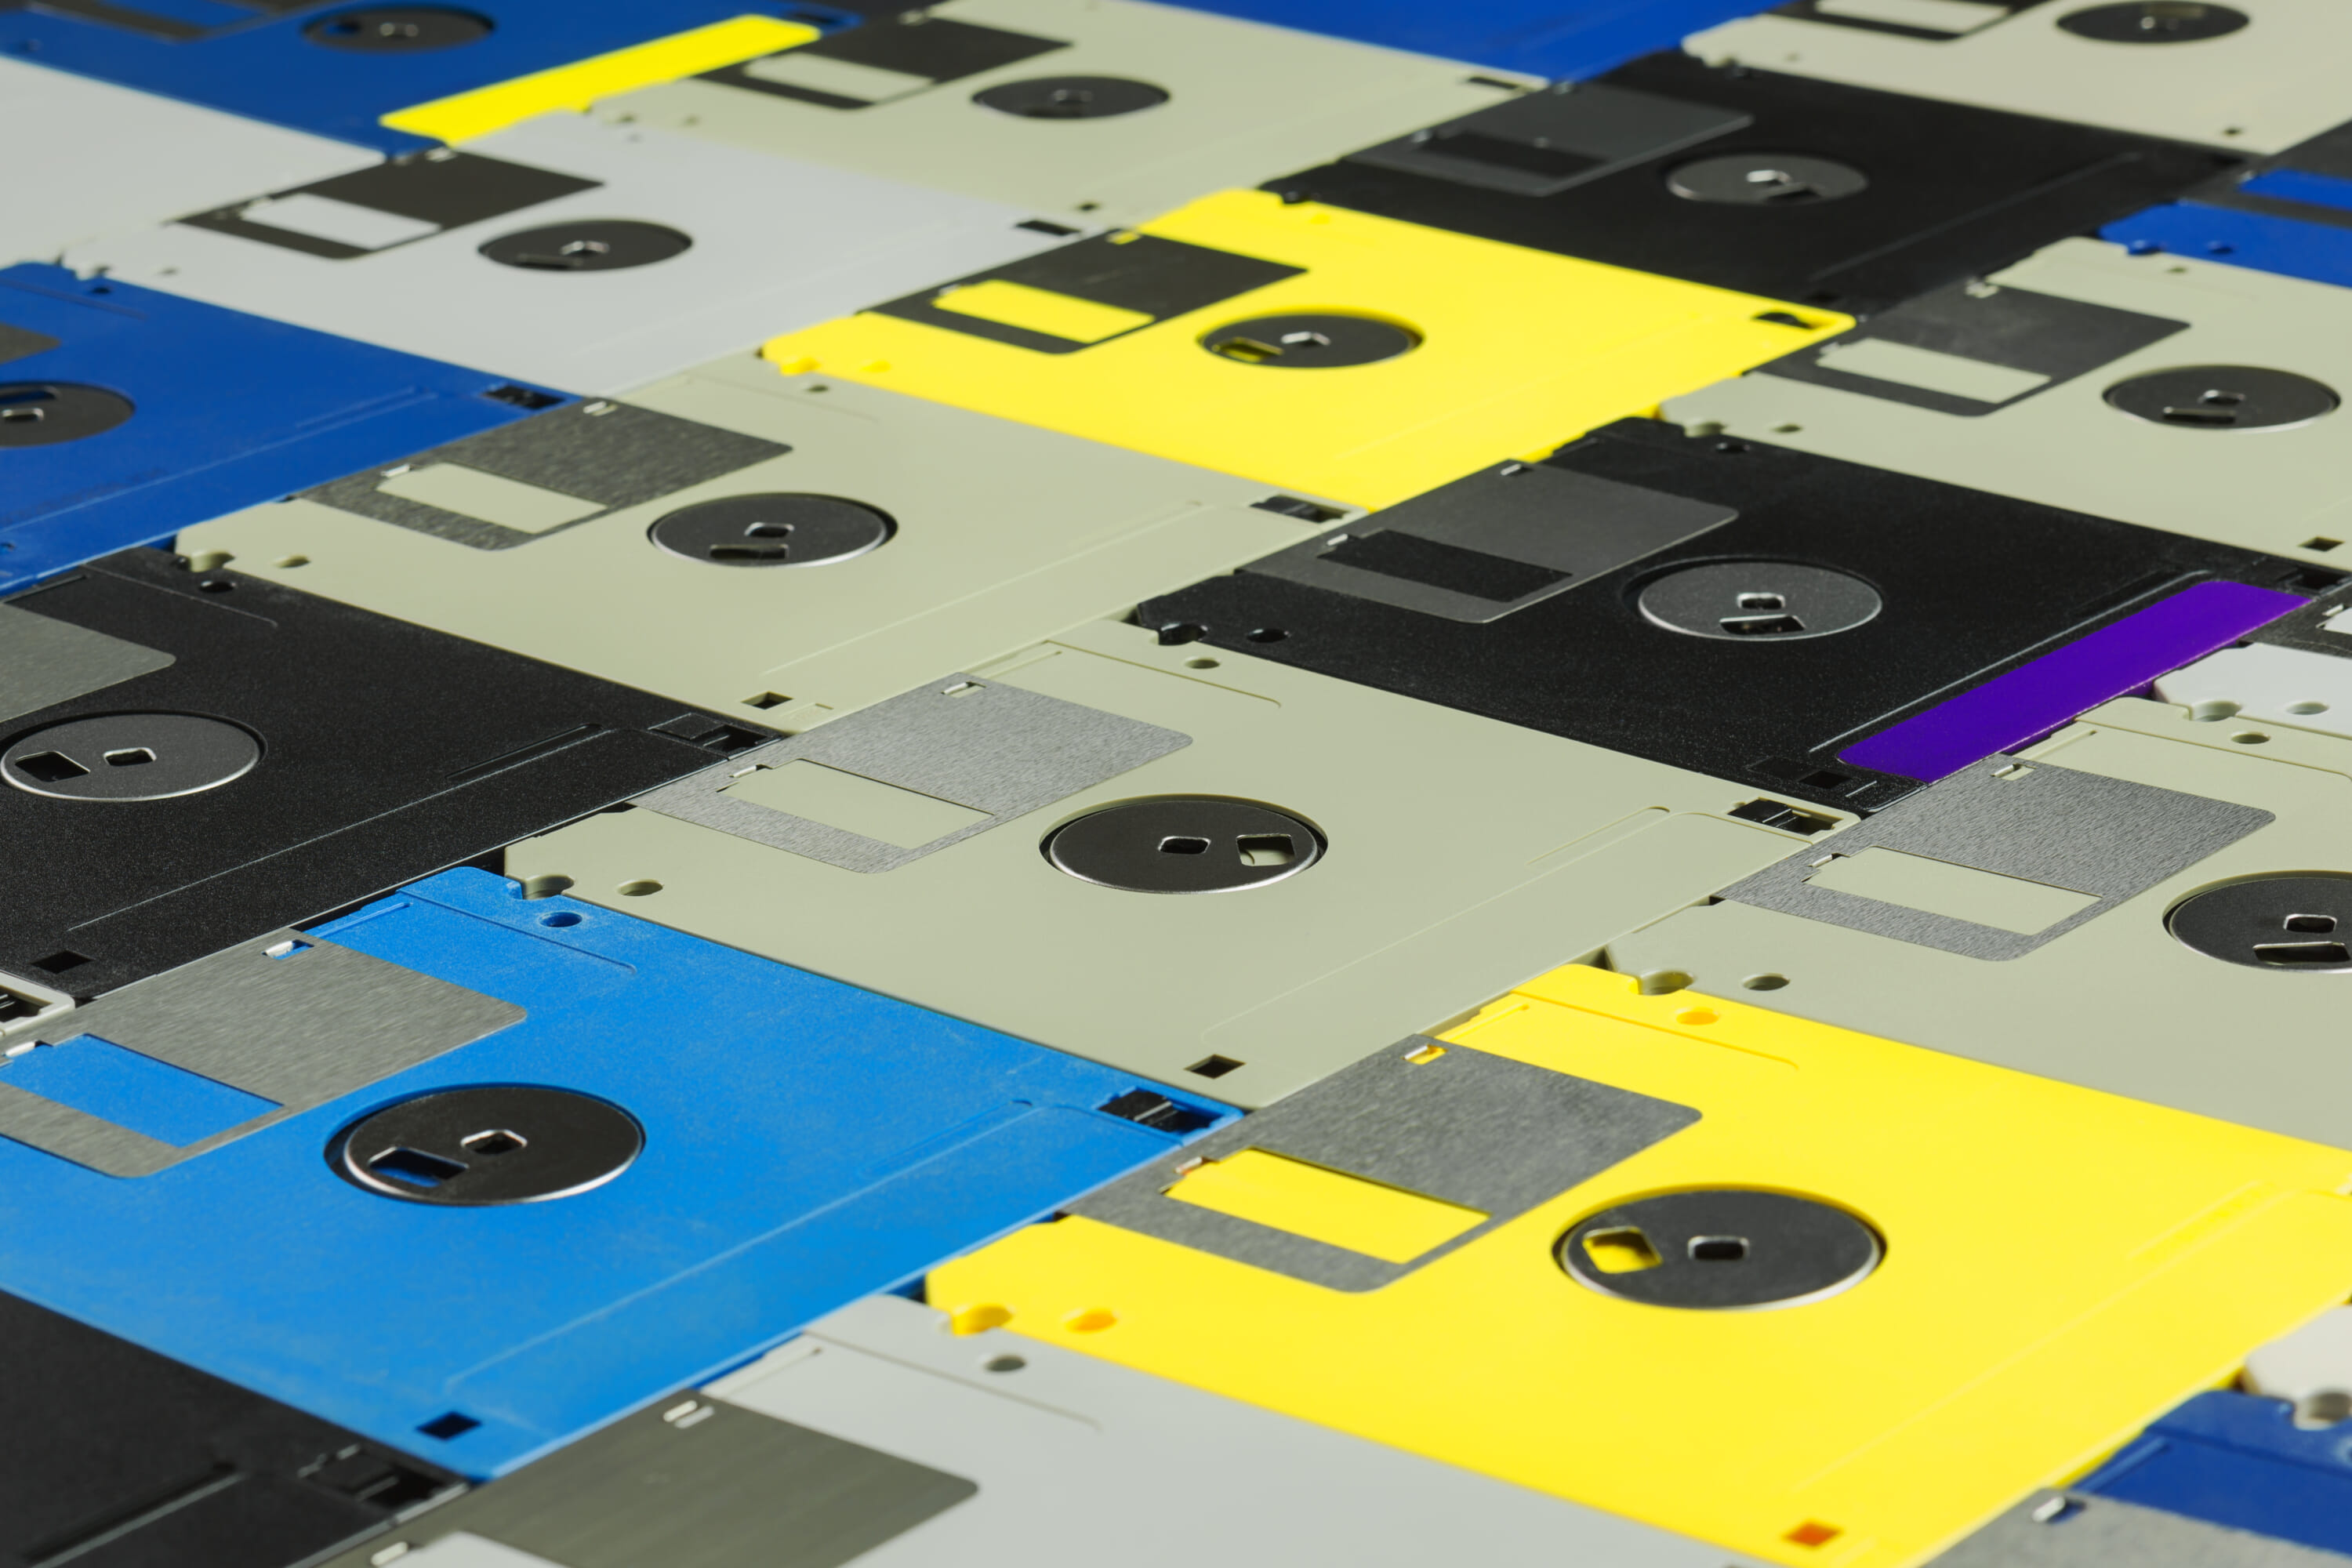 Taro Kono declares victory in the “war” against floppy disks